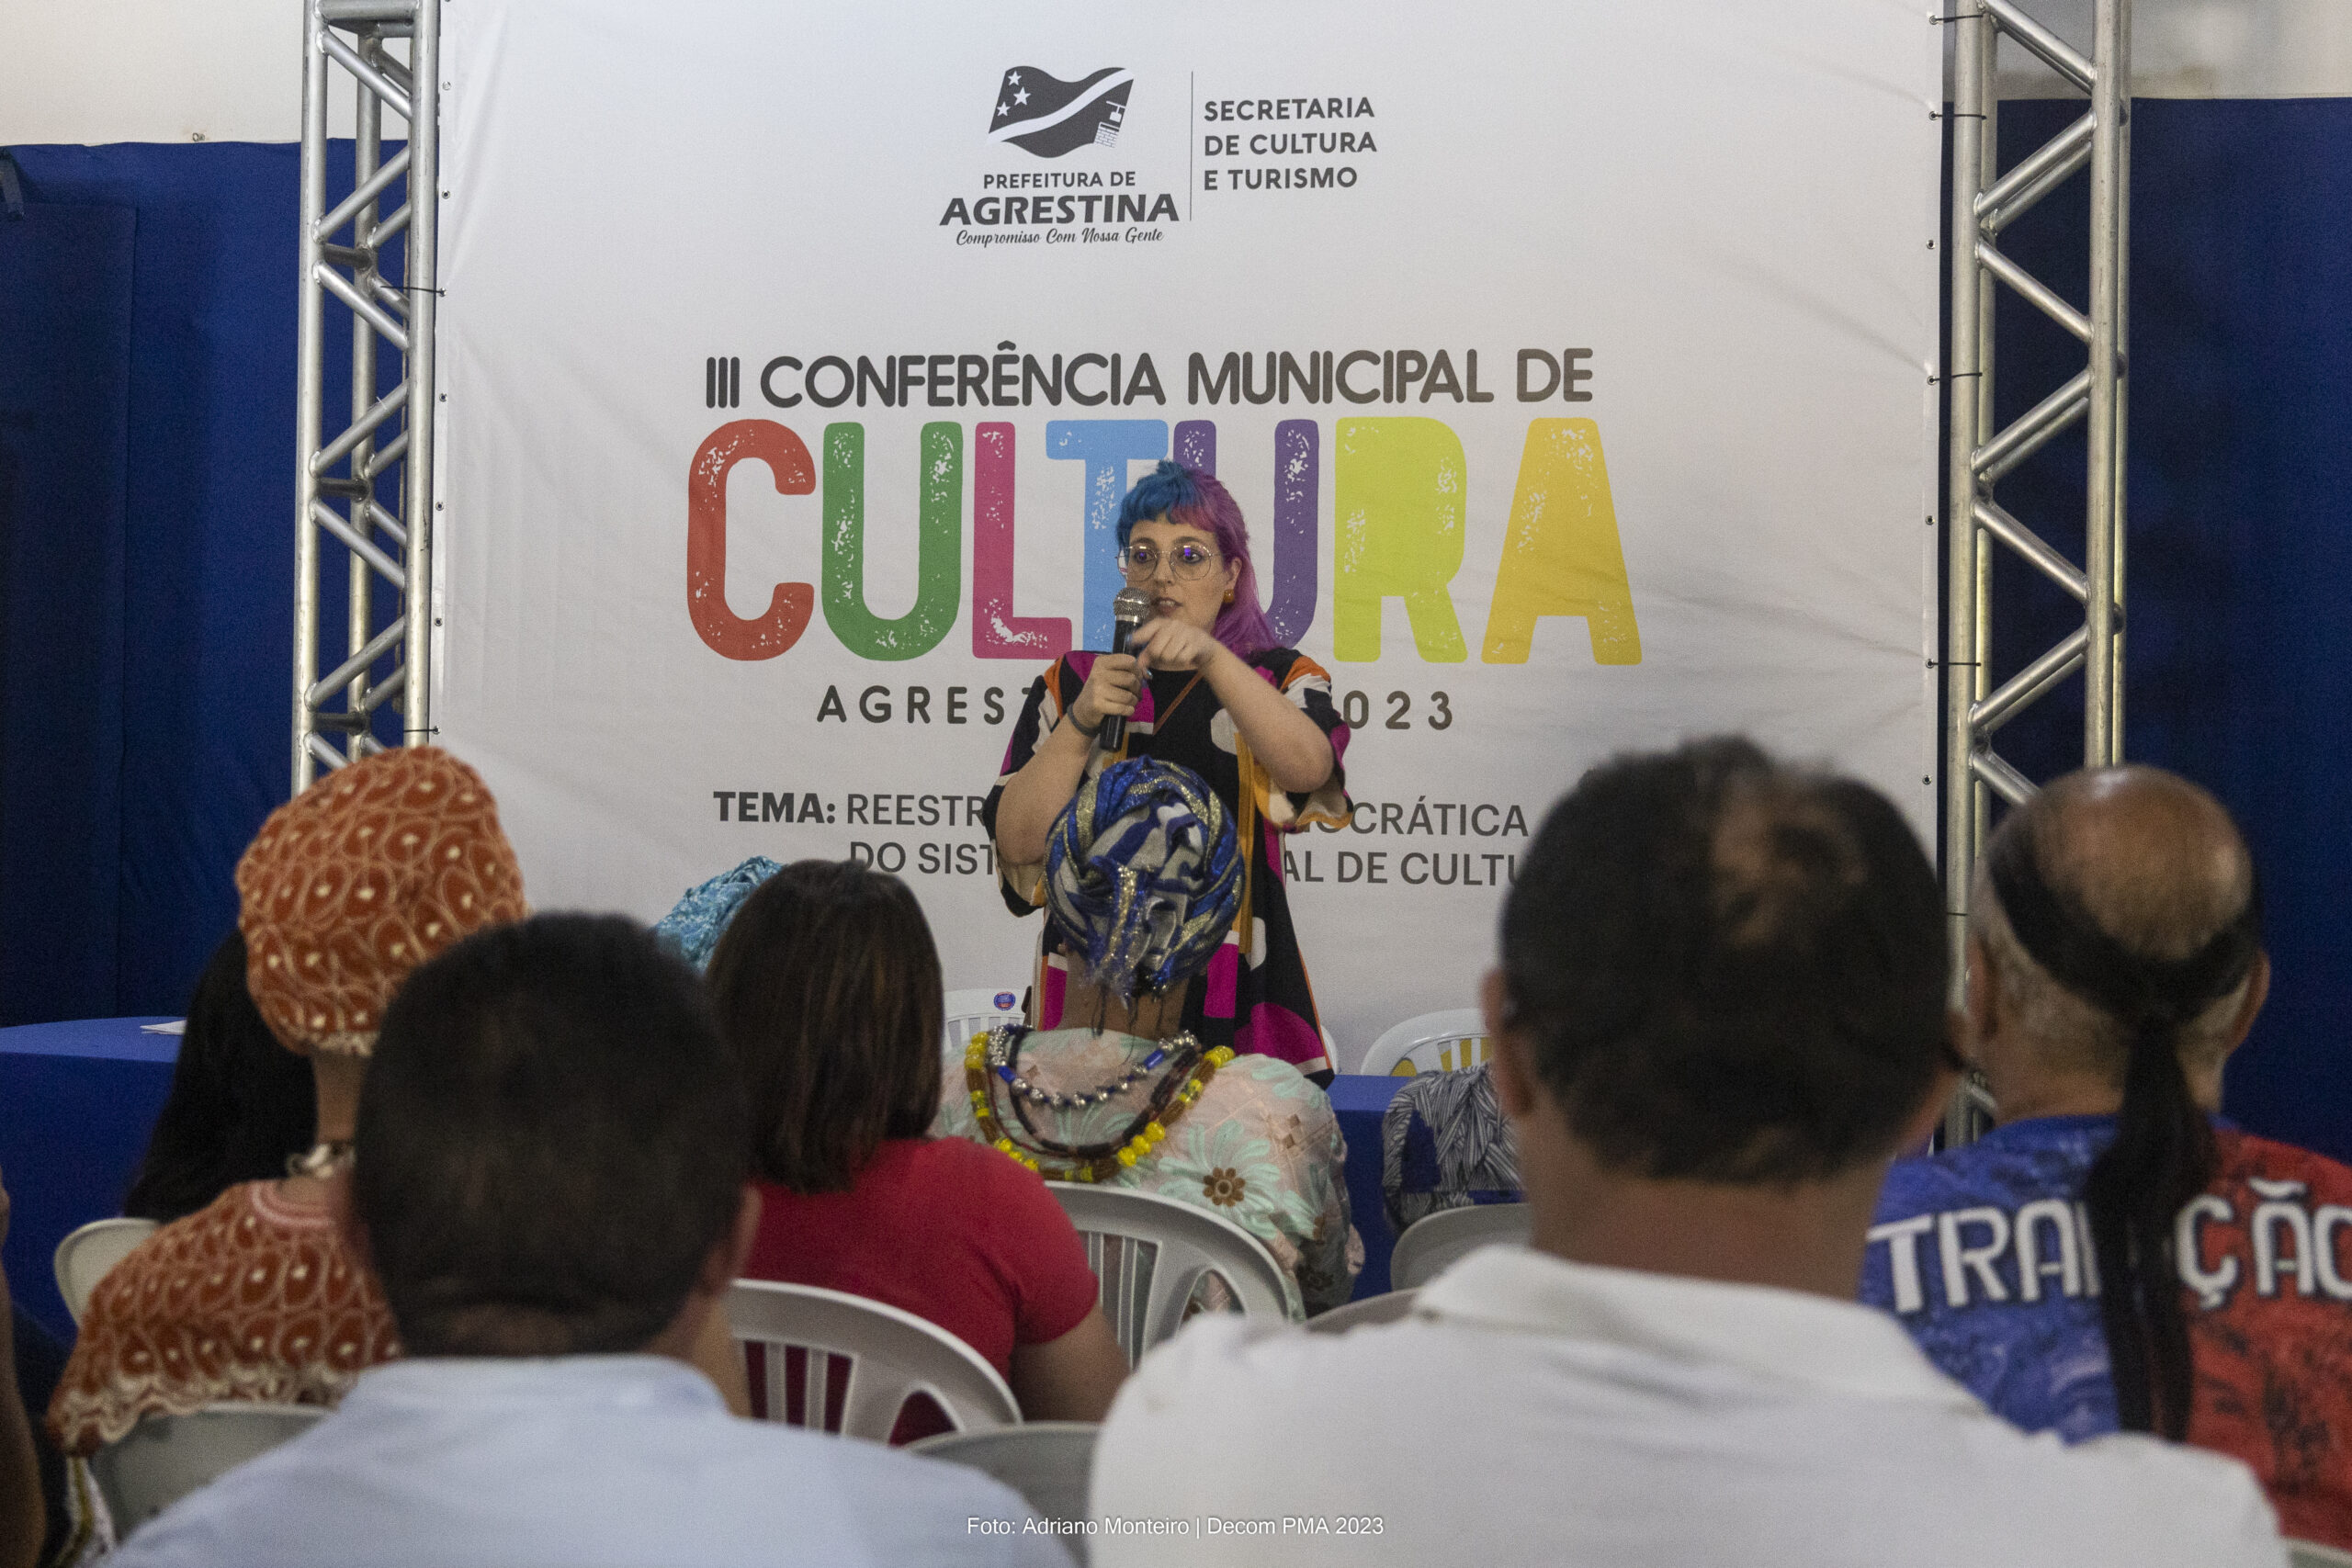  Agrestina realiza III Conferência Municipal de Cultura